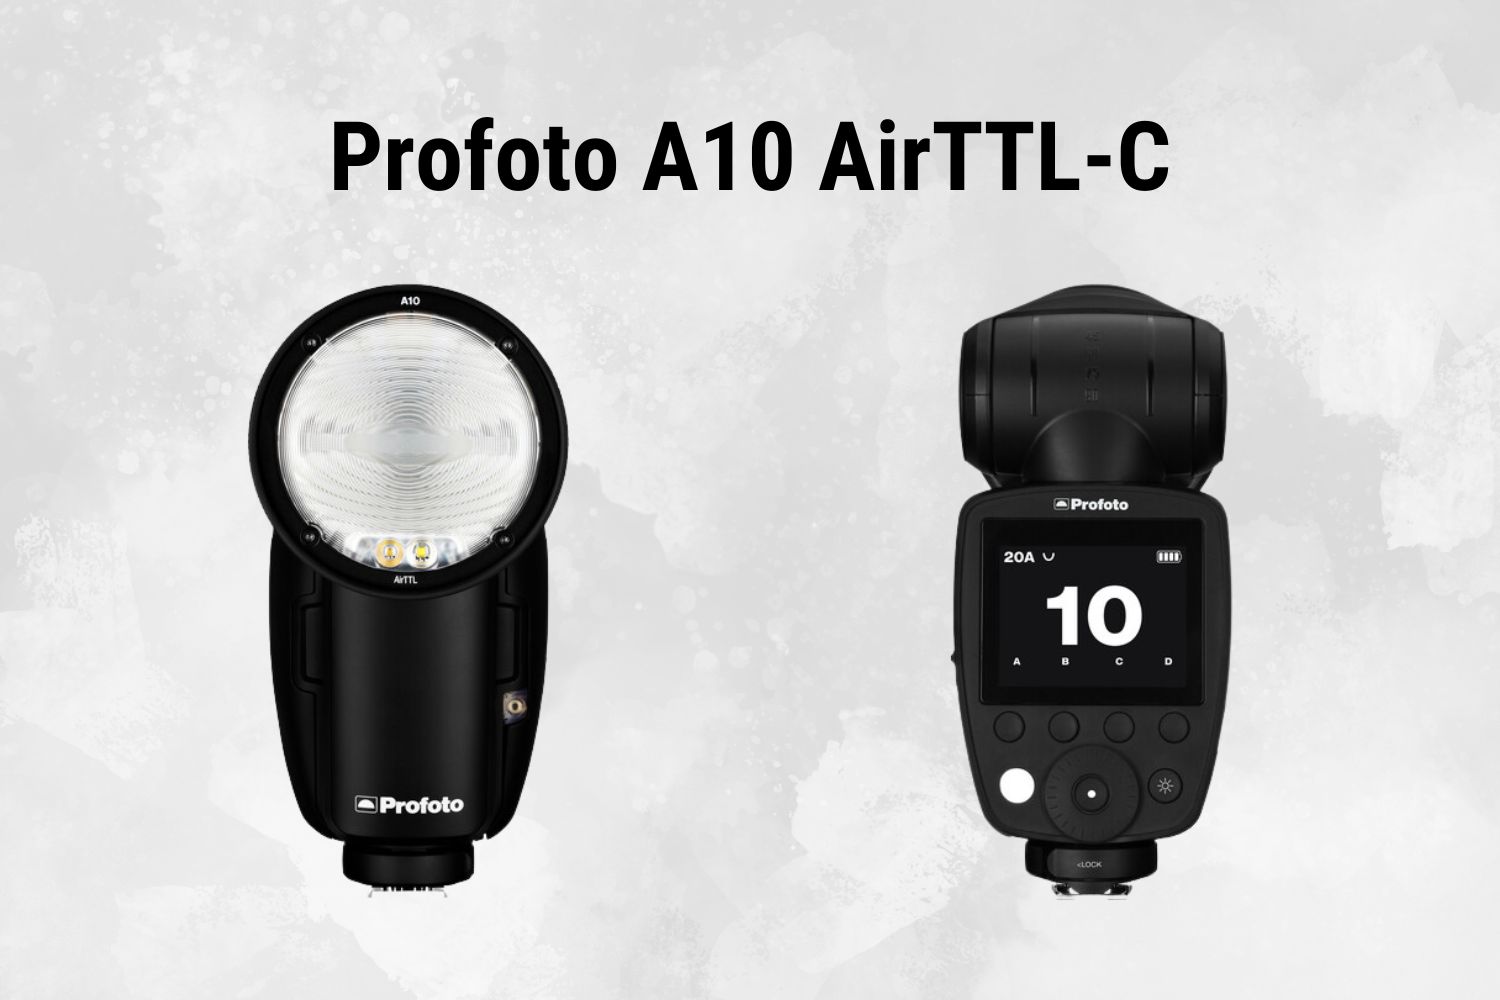 Profoto A10 AirTTL-C